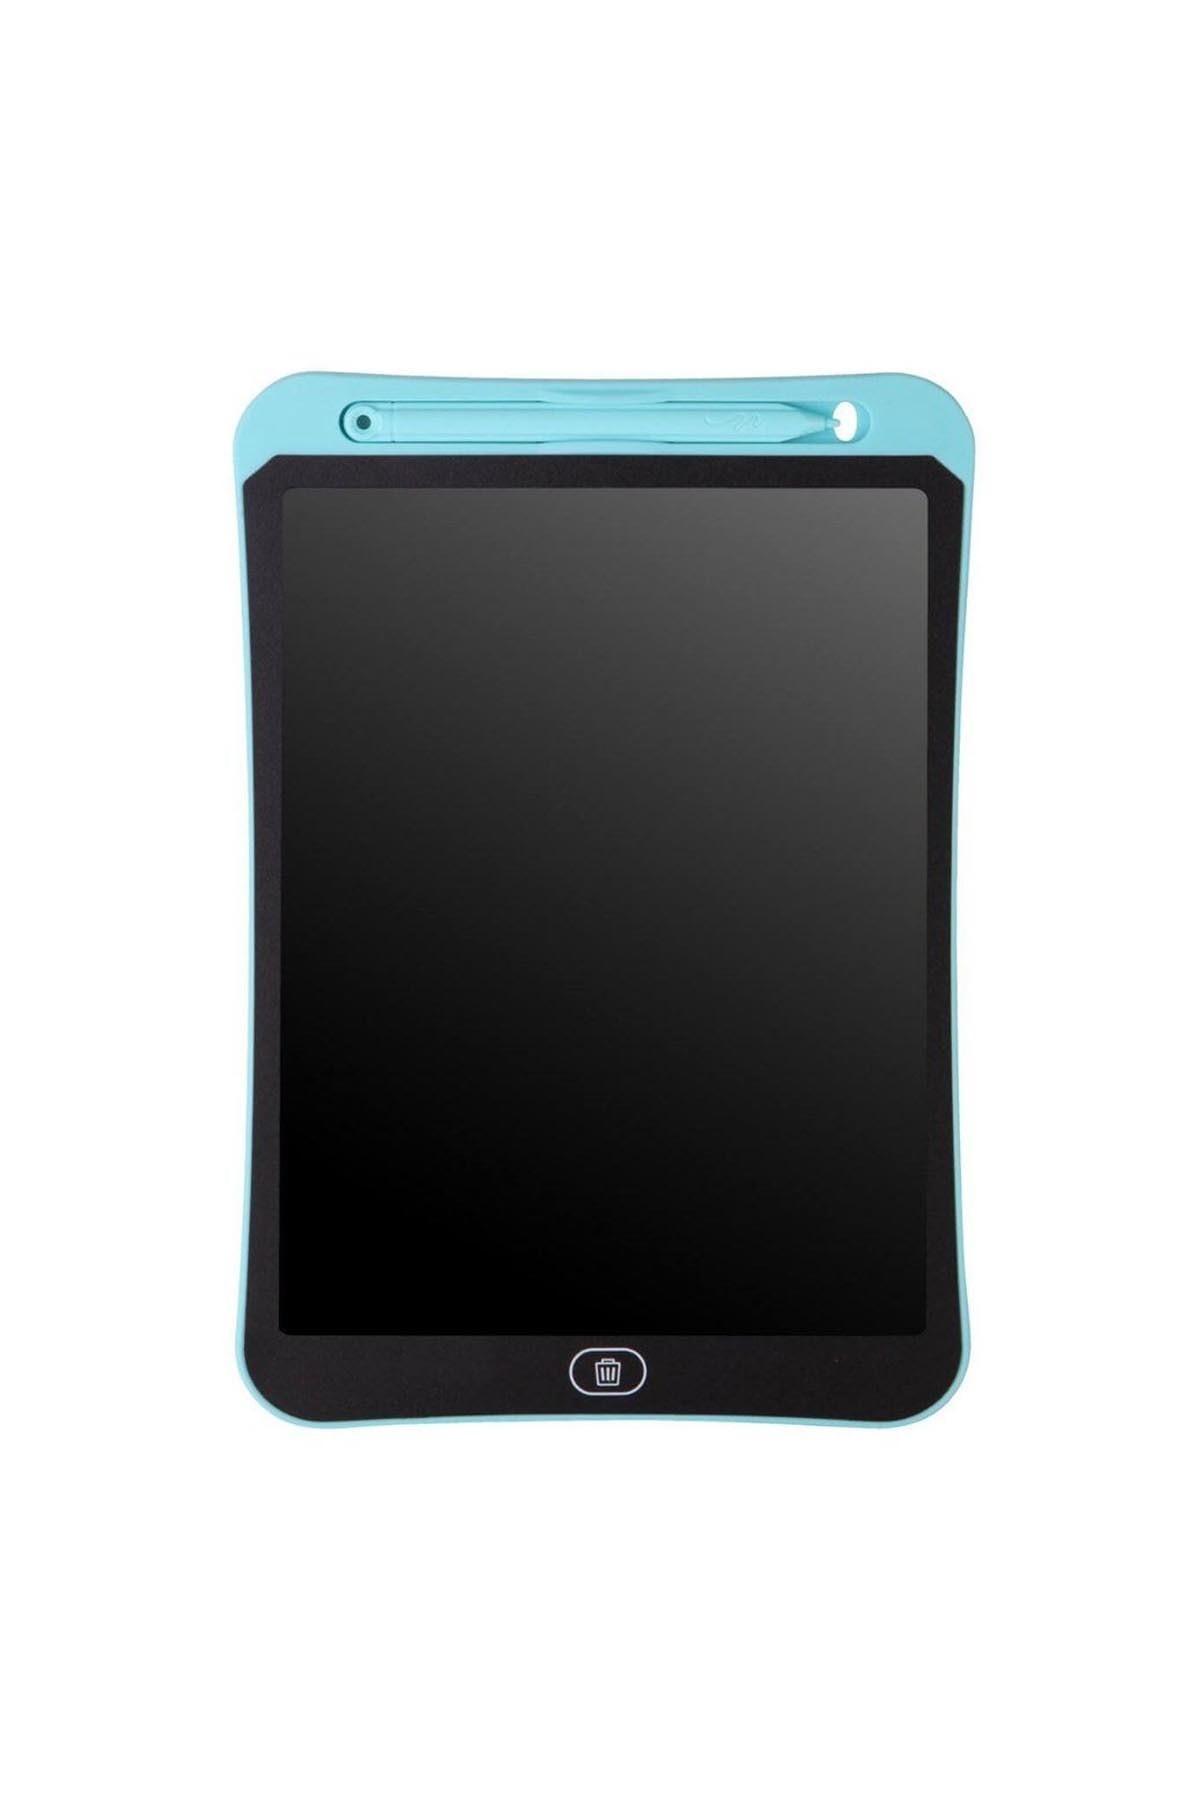 Let's Be Child 10 Inç LCD Renkli Çizim Tableti